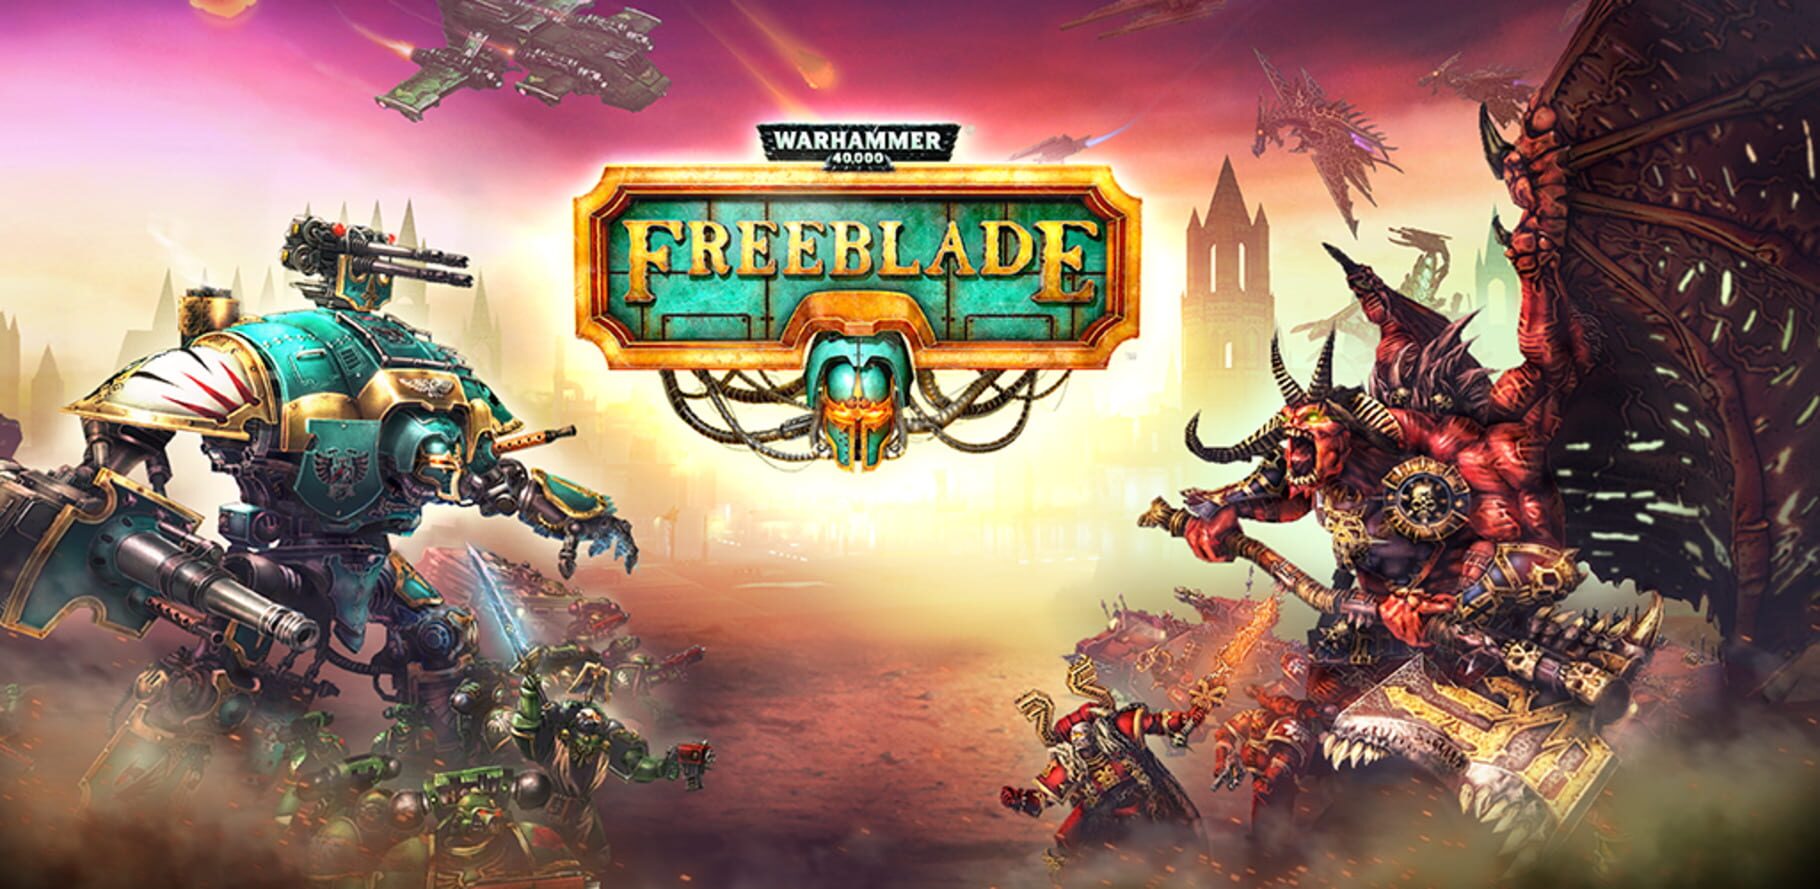 Arte - Warhammer 40,000: Freeblade